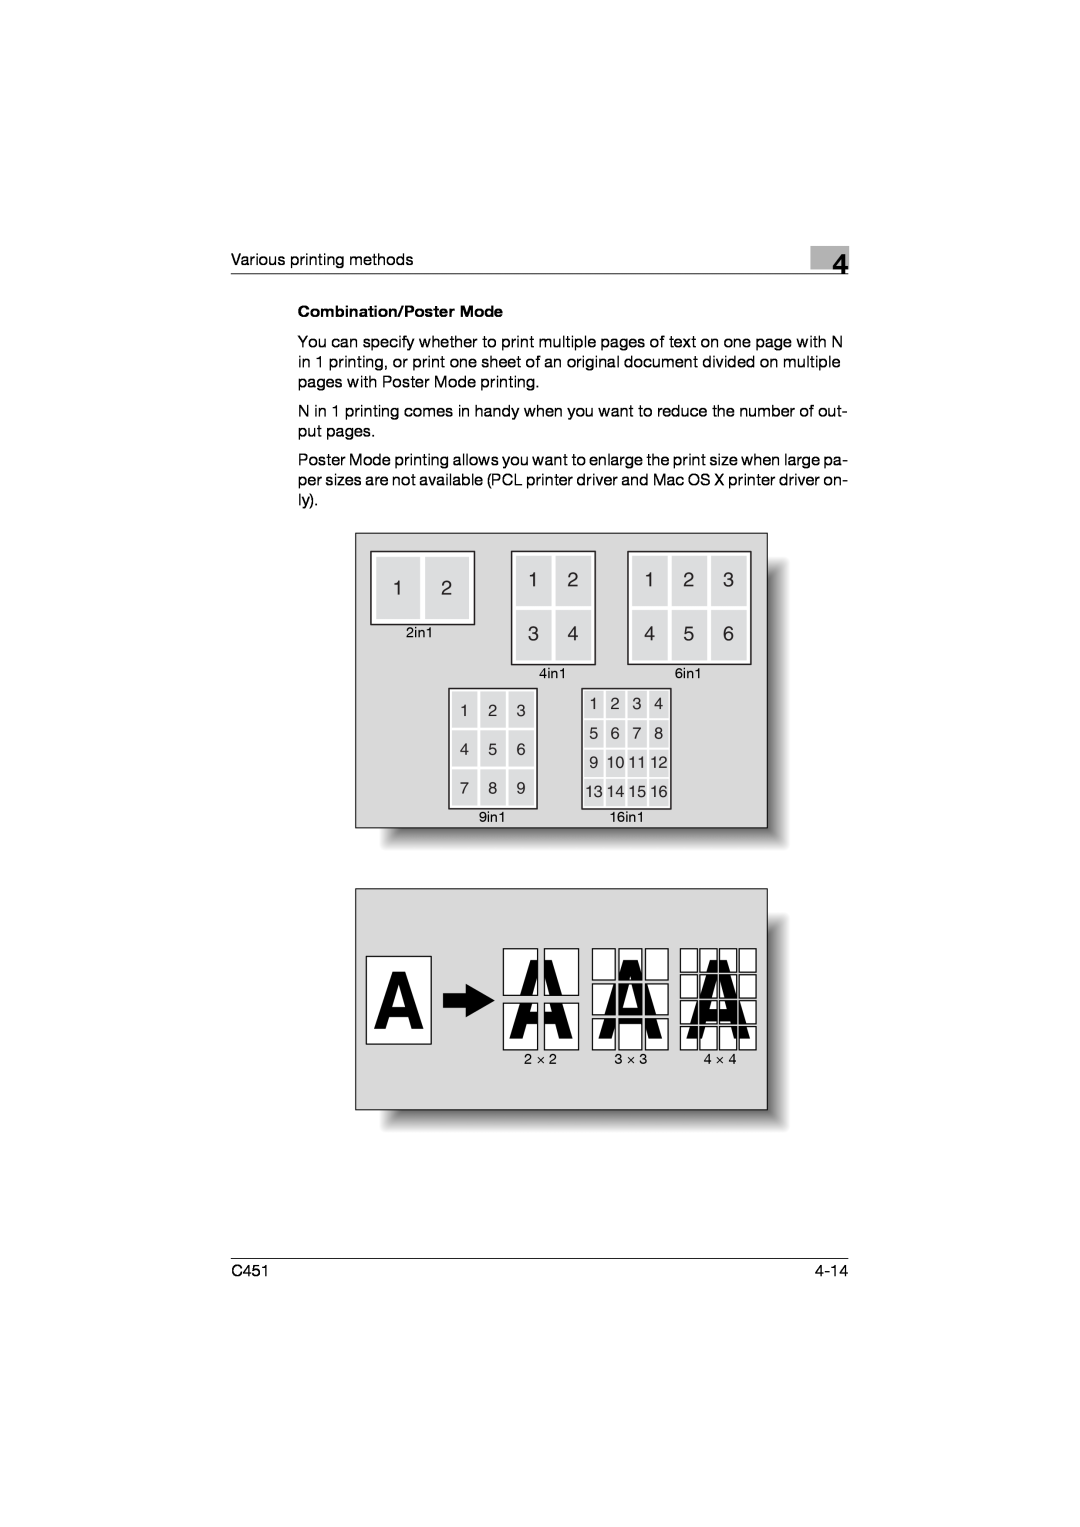 Konica Minolta C451 manual 1 2 4 5, Combination/Poster Mode 